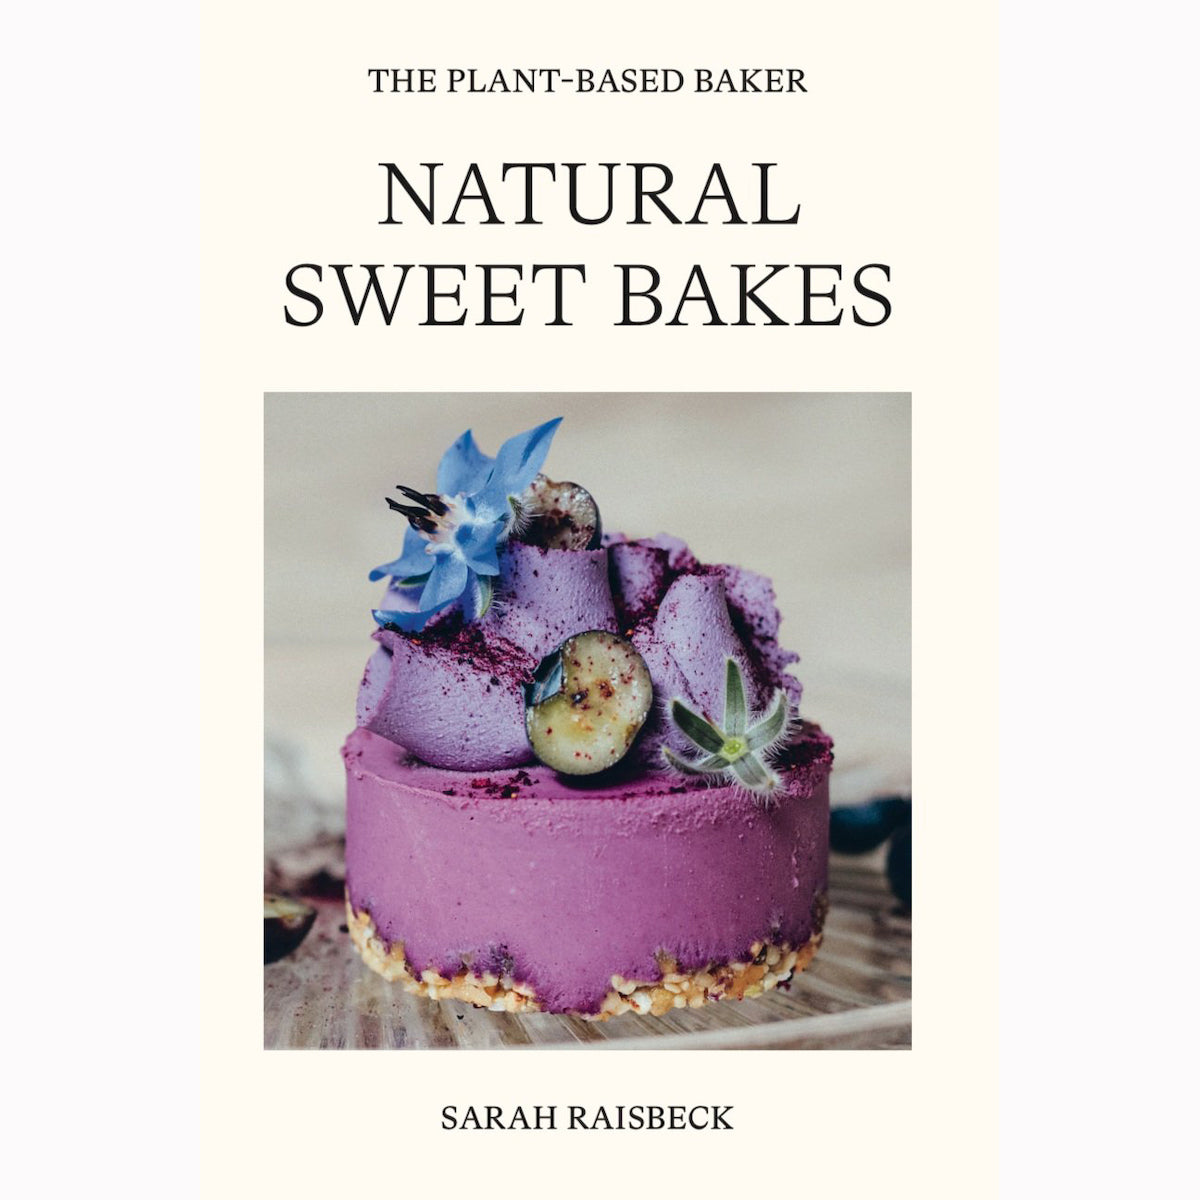 The Plant Based Baker by Sarah Raisbeck - Natural Sweet Bakes